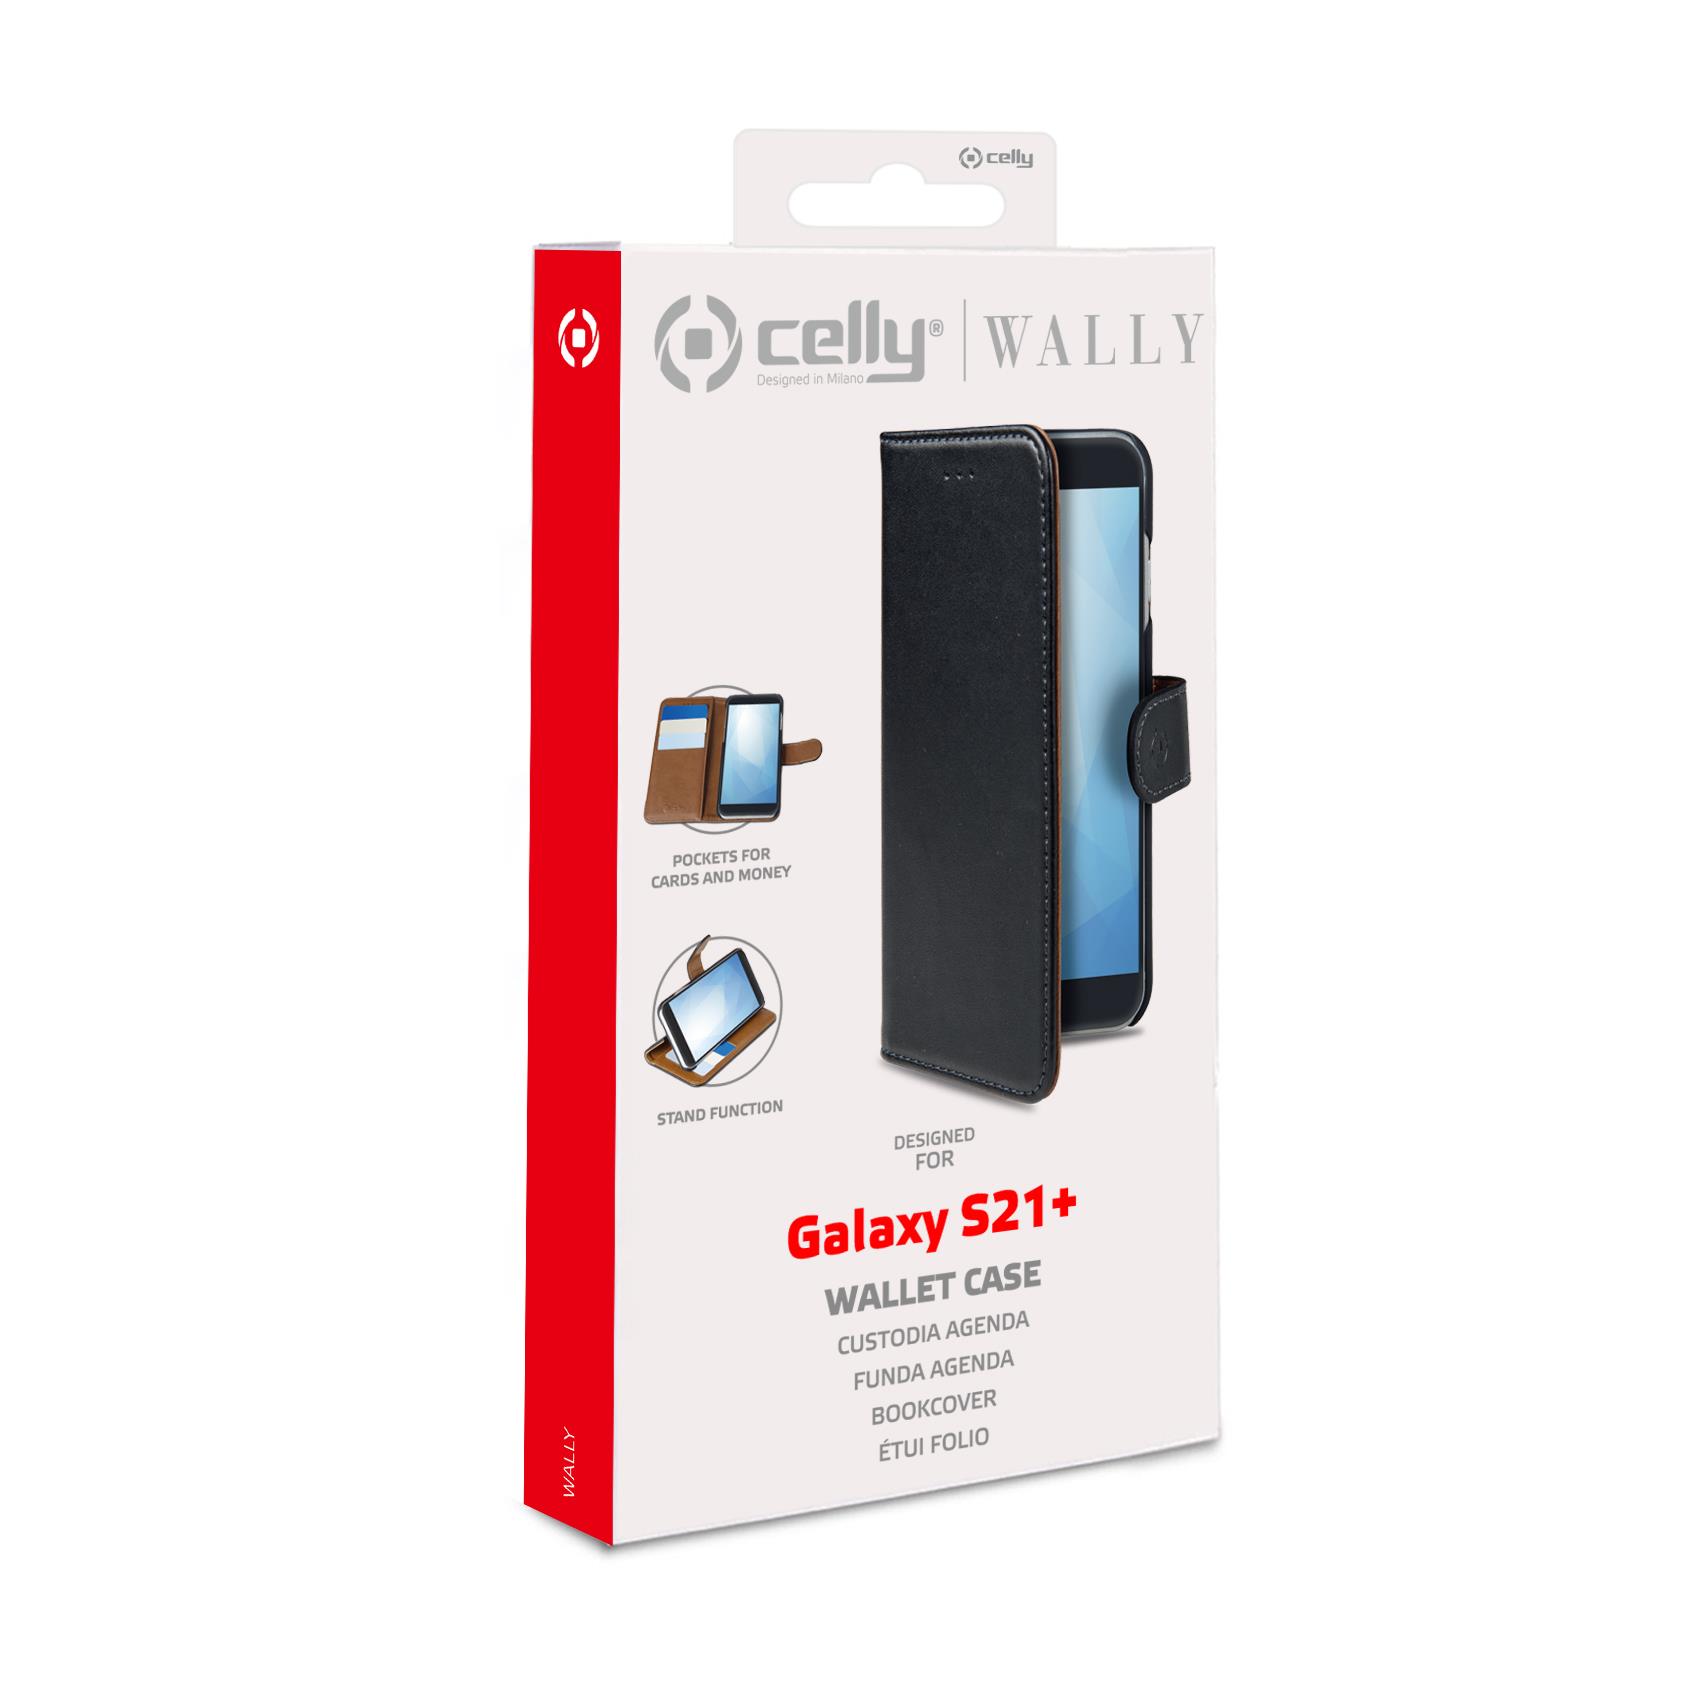 Wally Case Galaxy S21 5g Black Celly Wally995 8021735763901